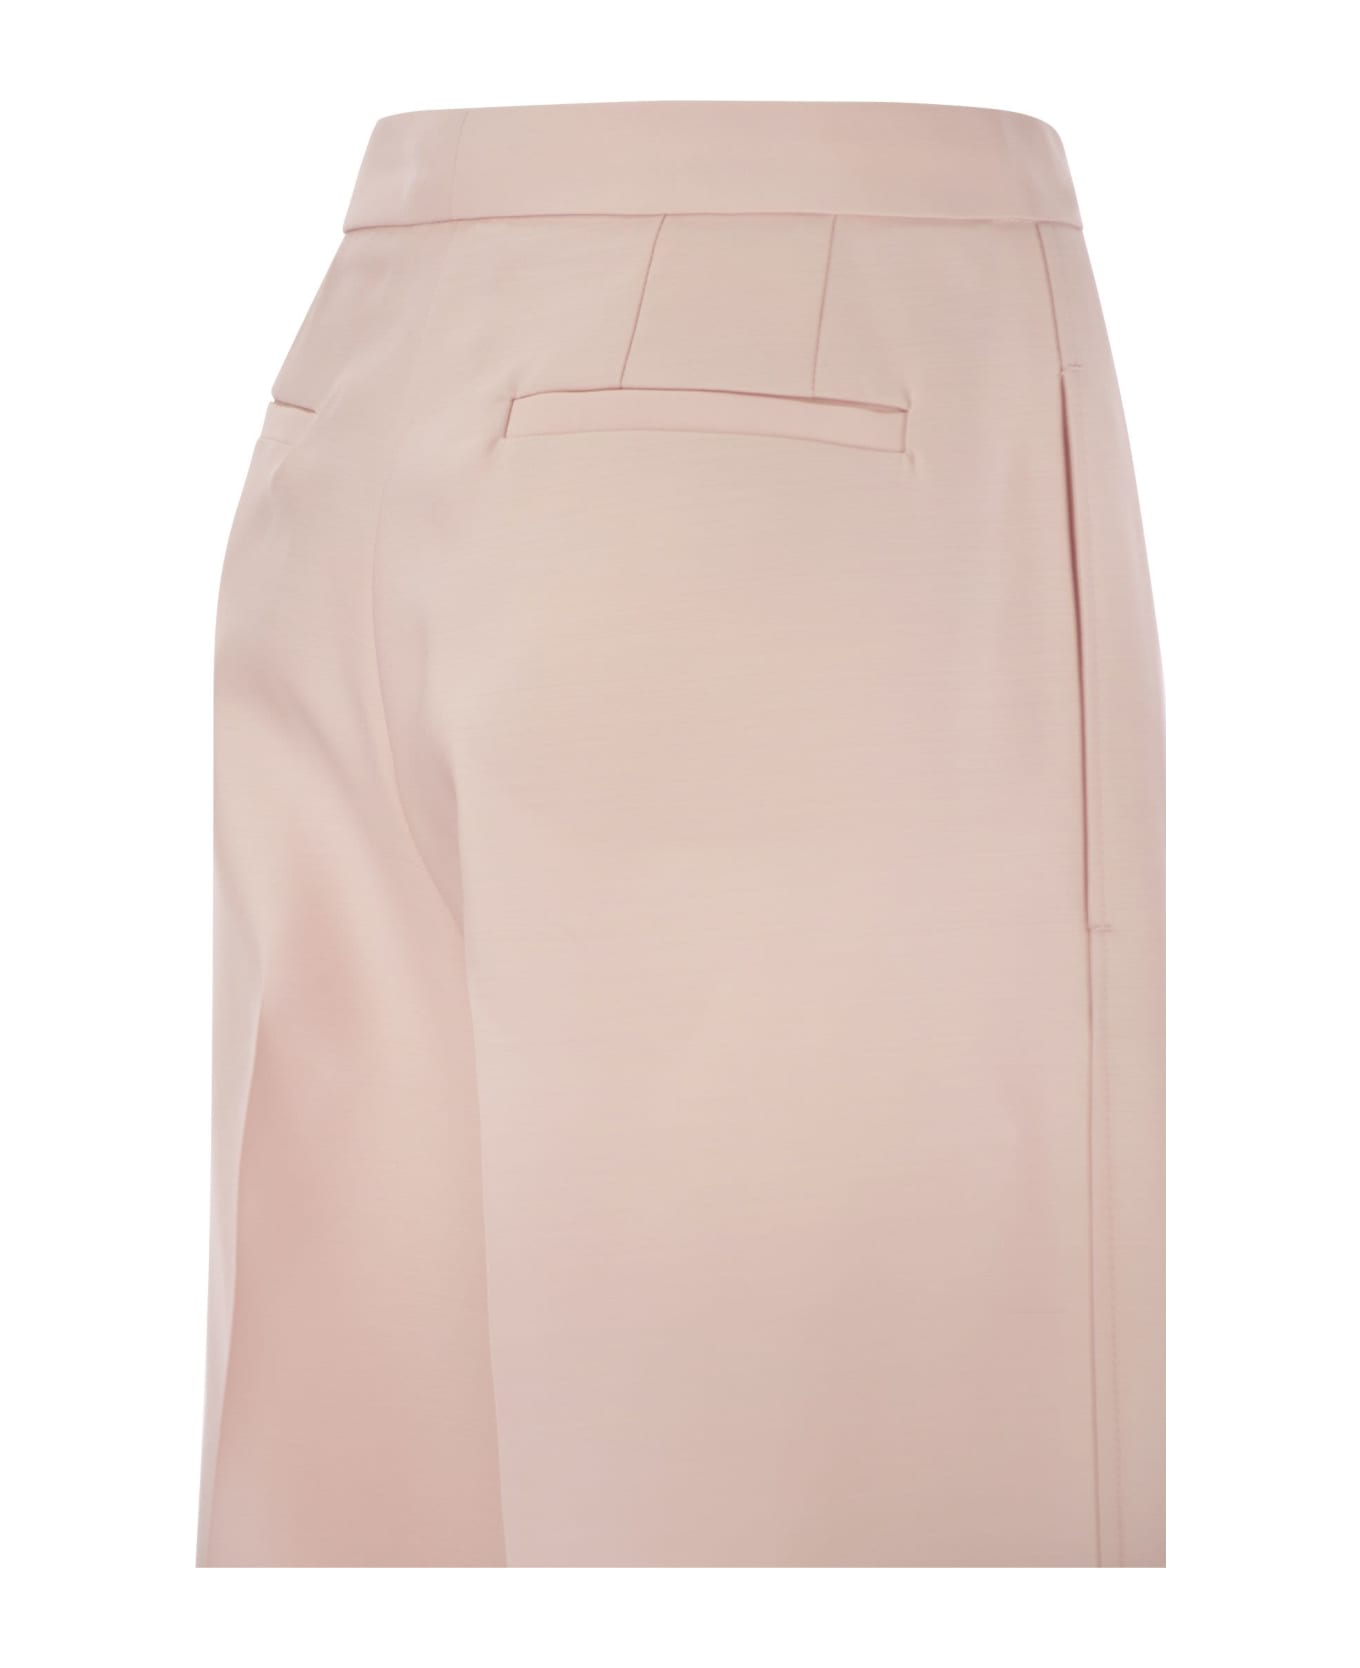 Fabiana Filippi Wool And Silk Wide Trousers - Pink